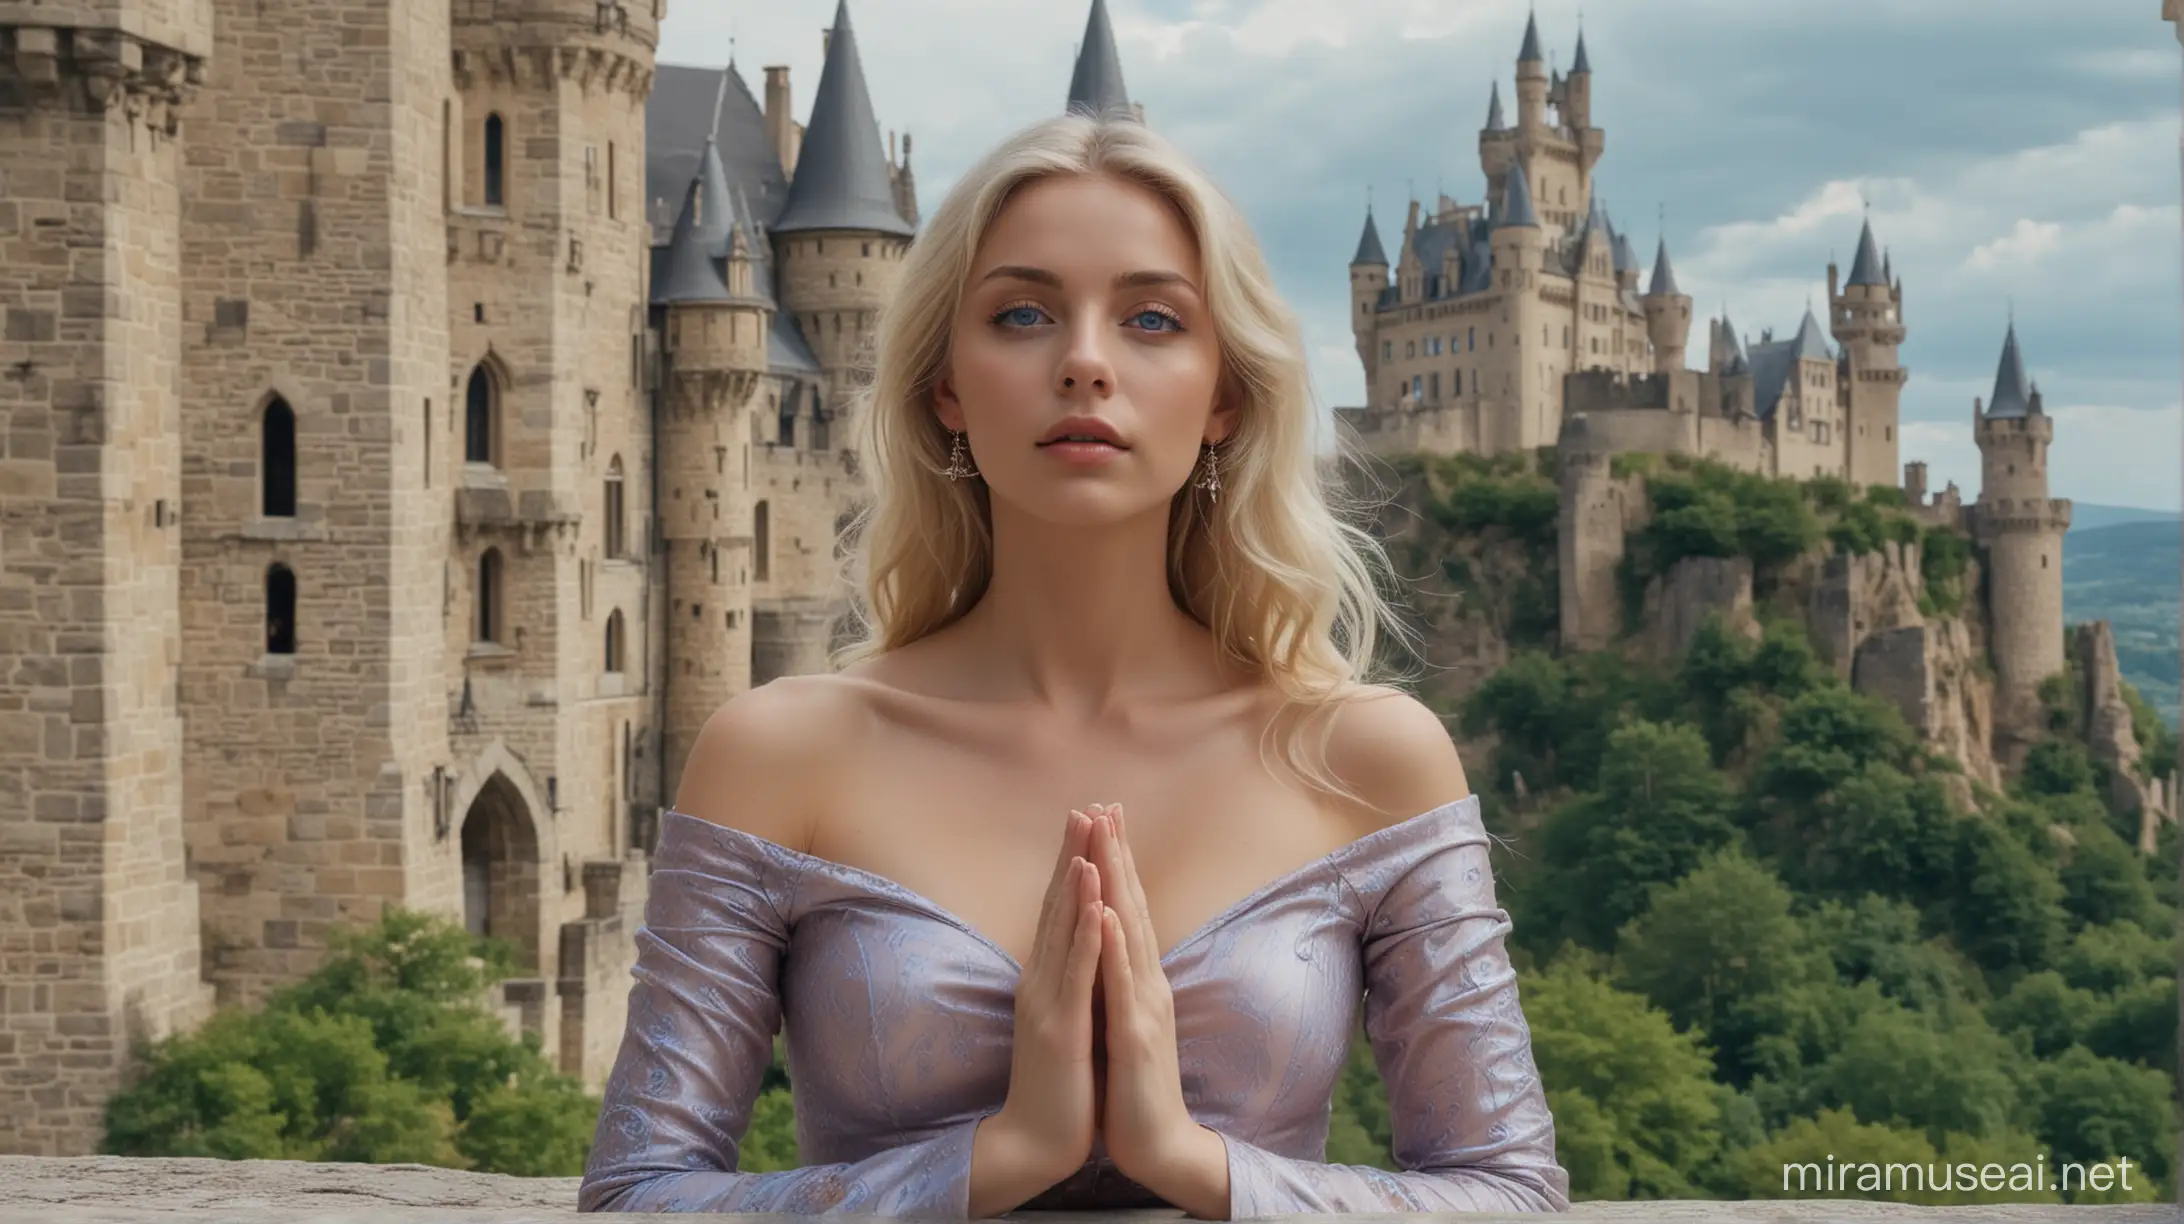 Sensual Blonde Woman Meditating Against Enchanting Castle Backdrop